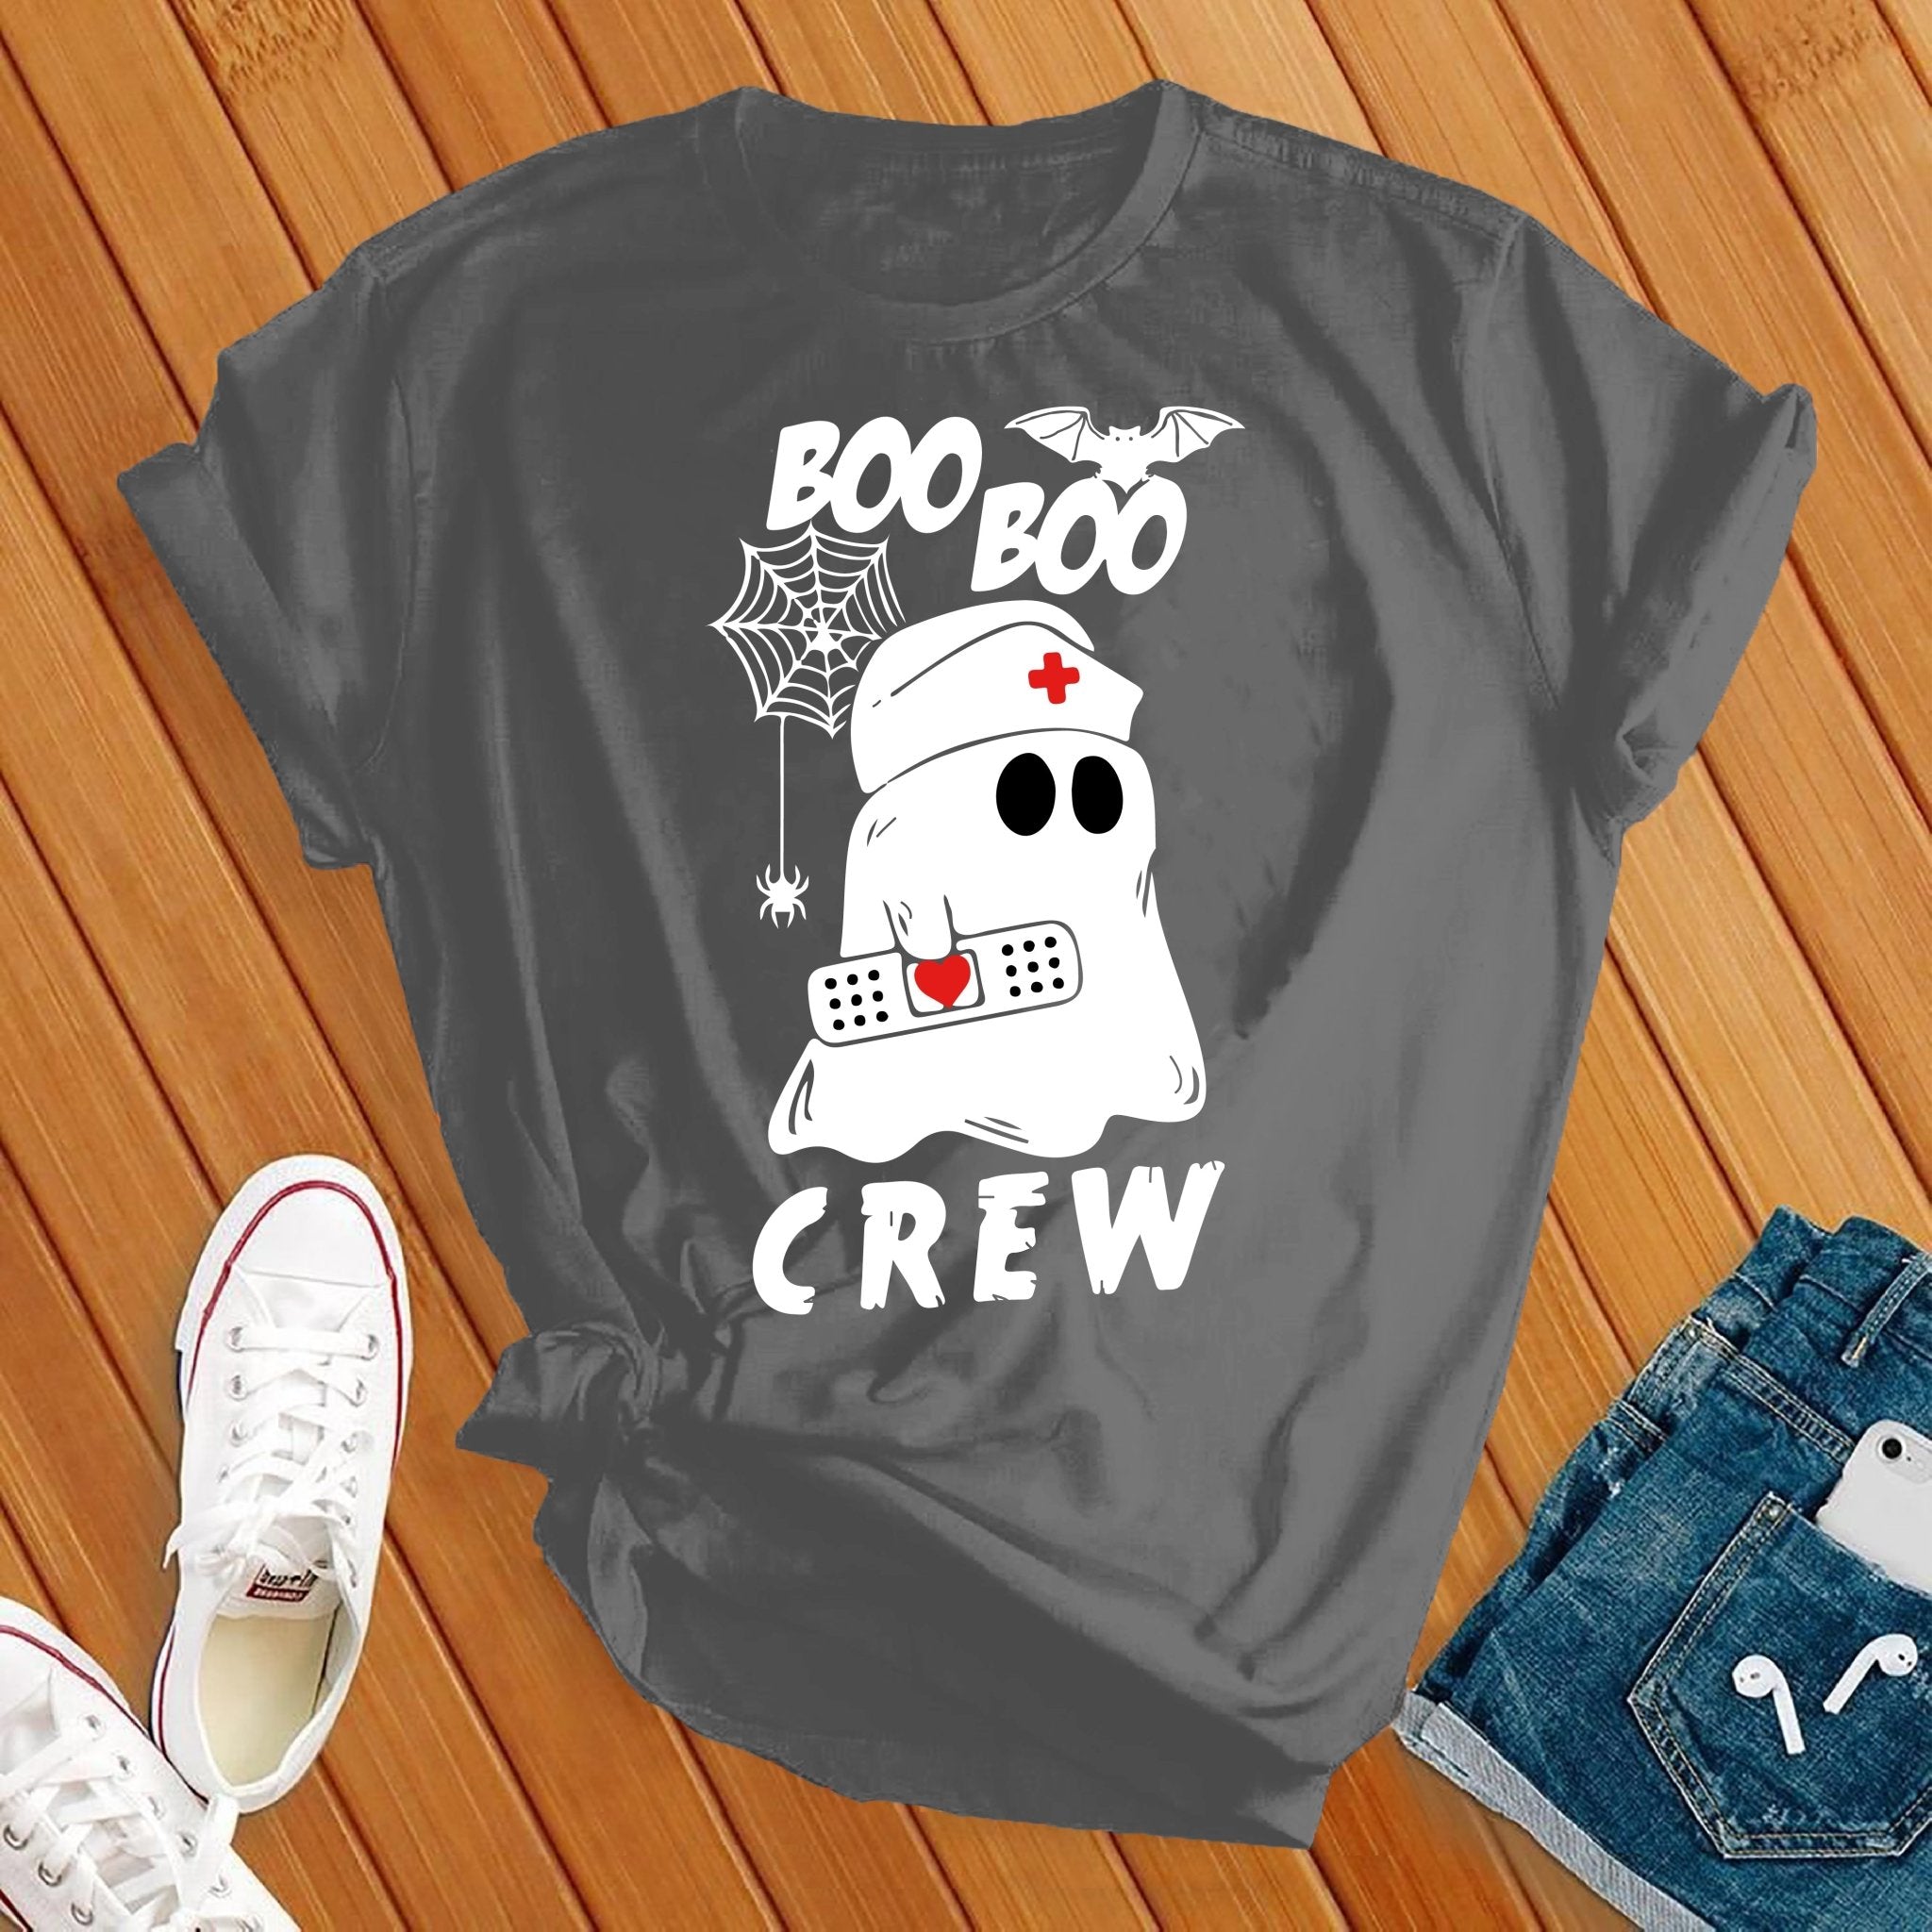 Boo Boo Crew Tee - Love Tees